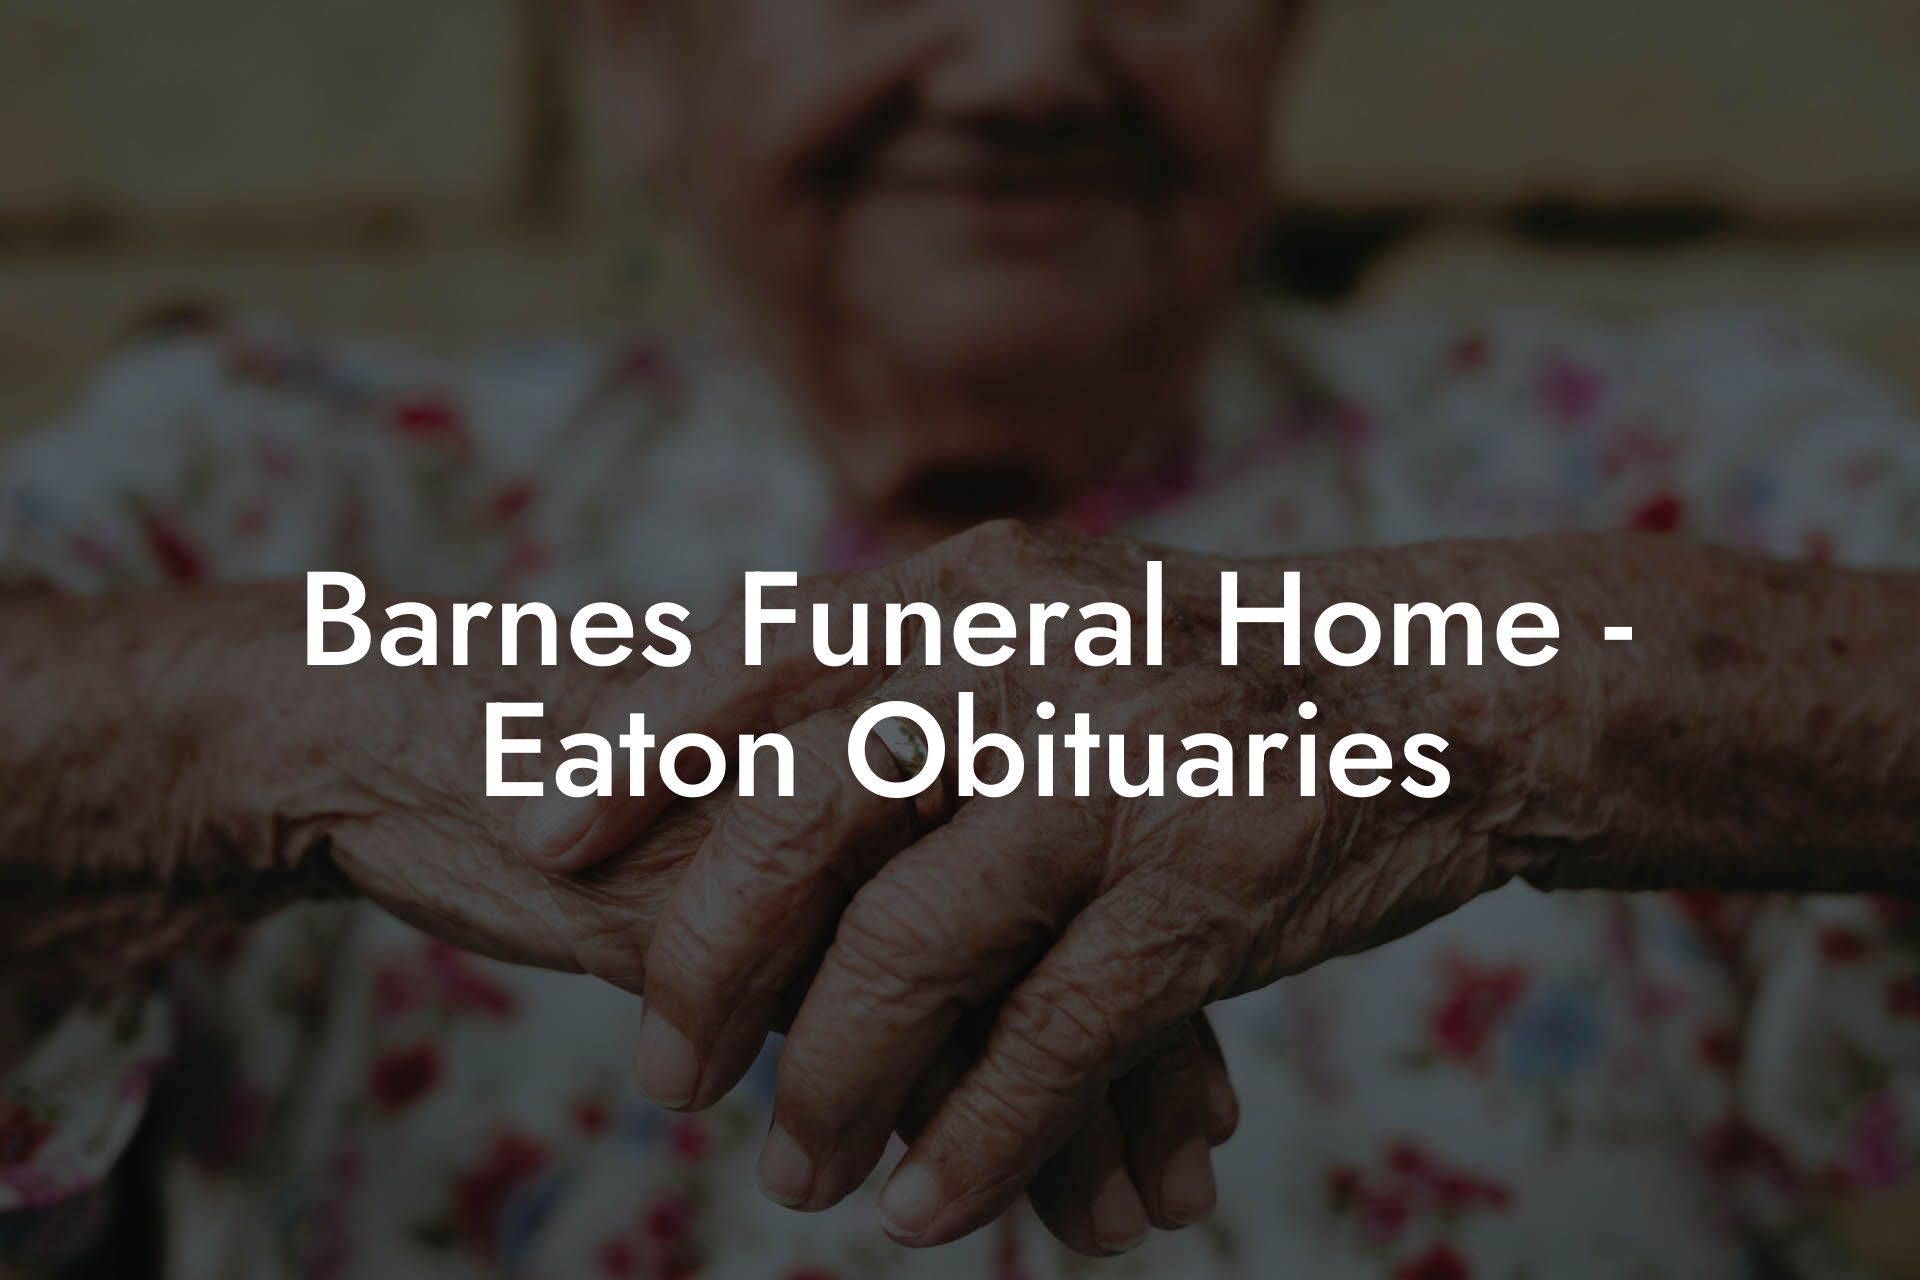 Barnes Funeral Home - Eaton Obituaries